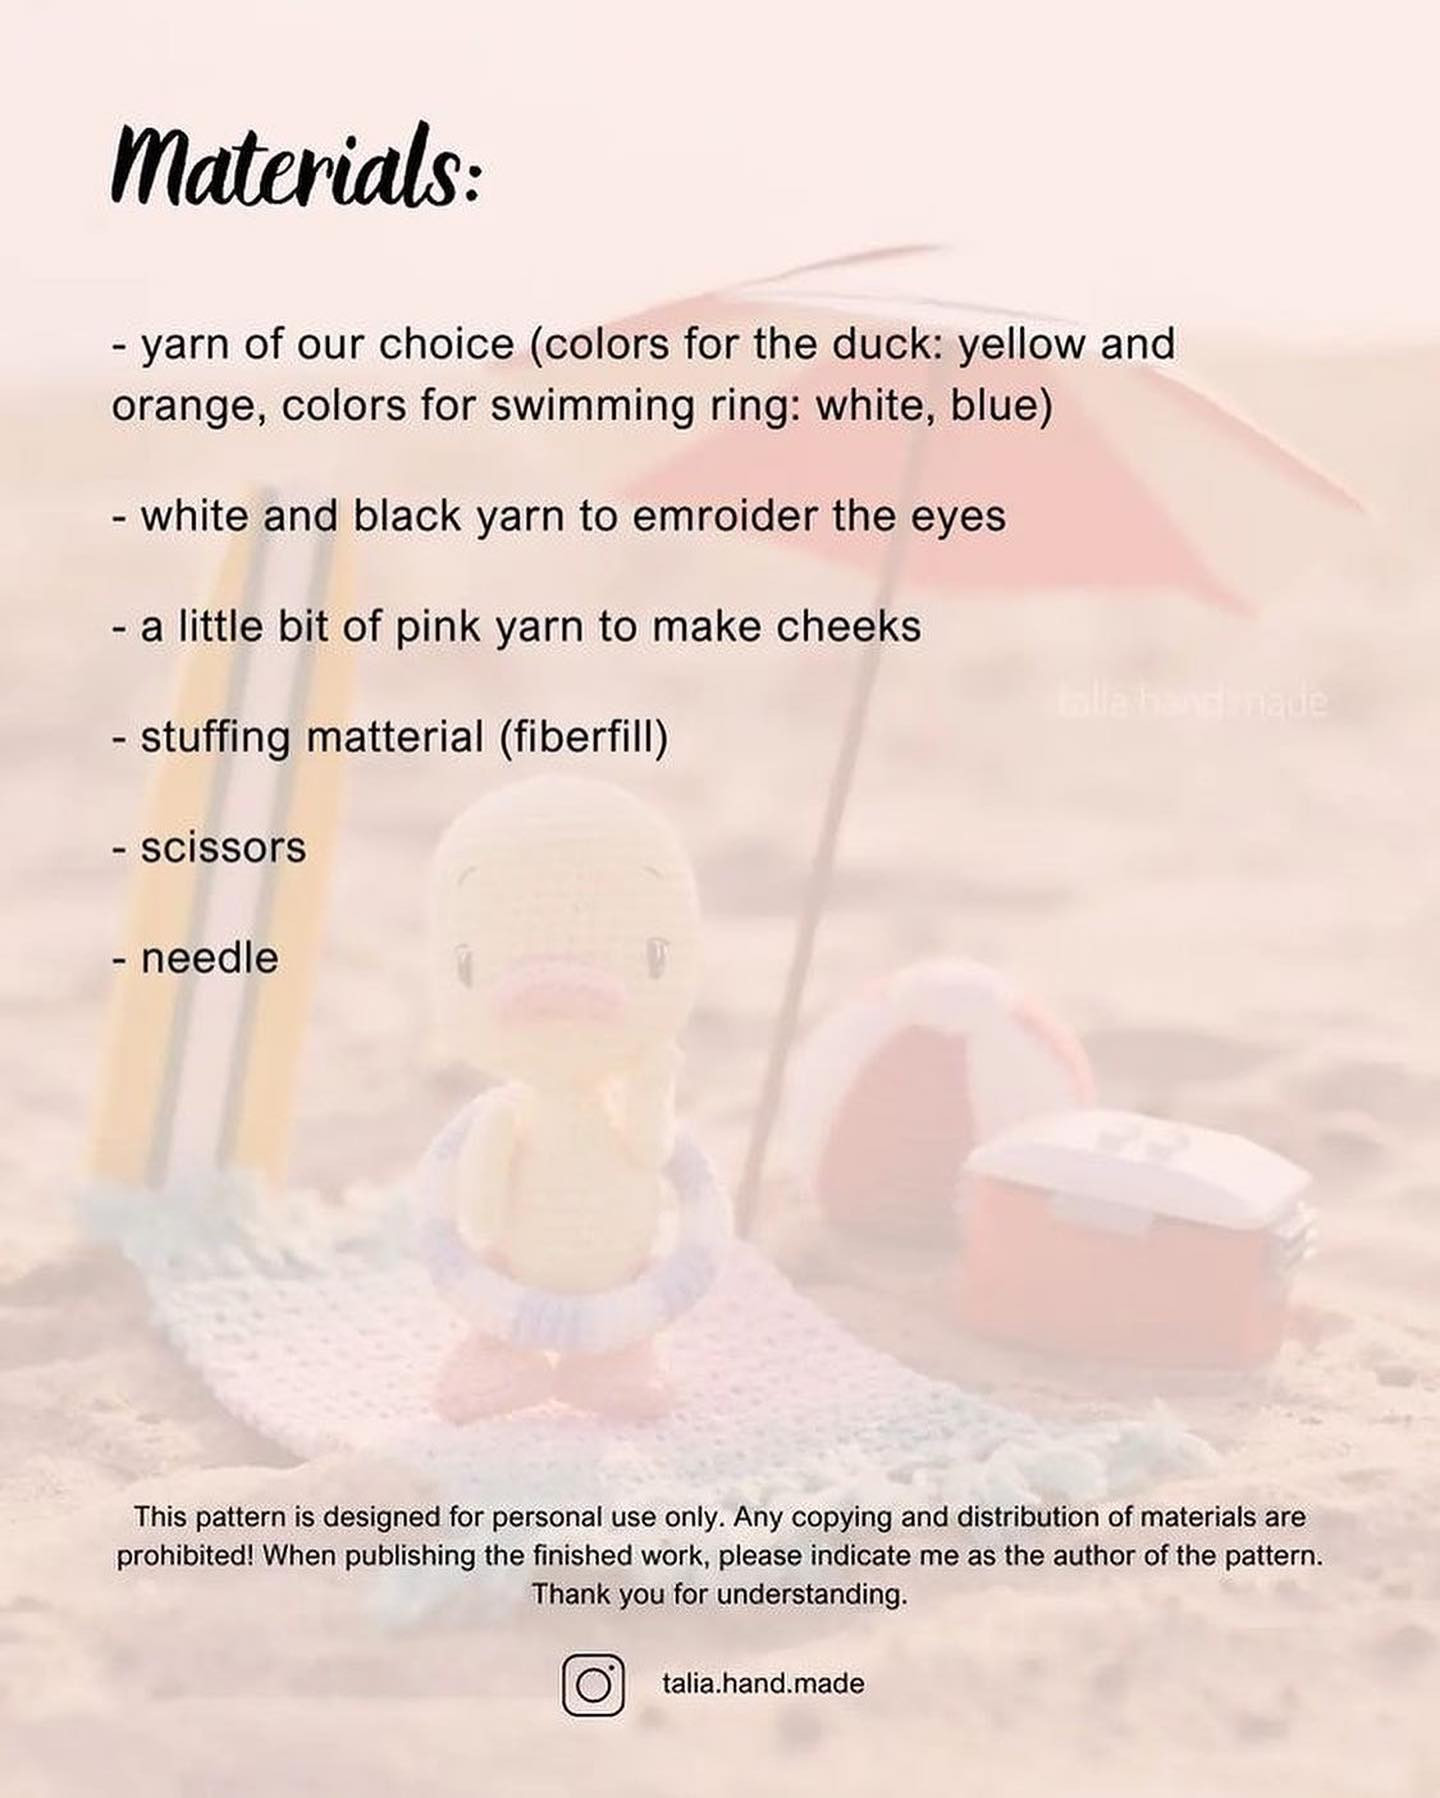 free crochet pattern duck on vacation